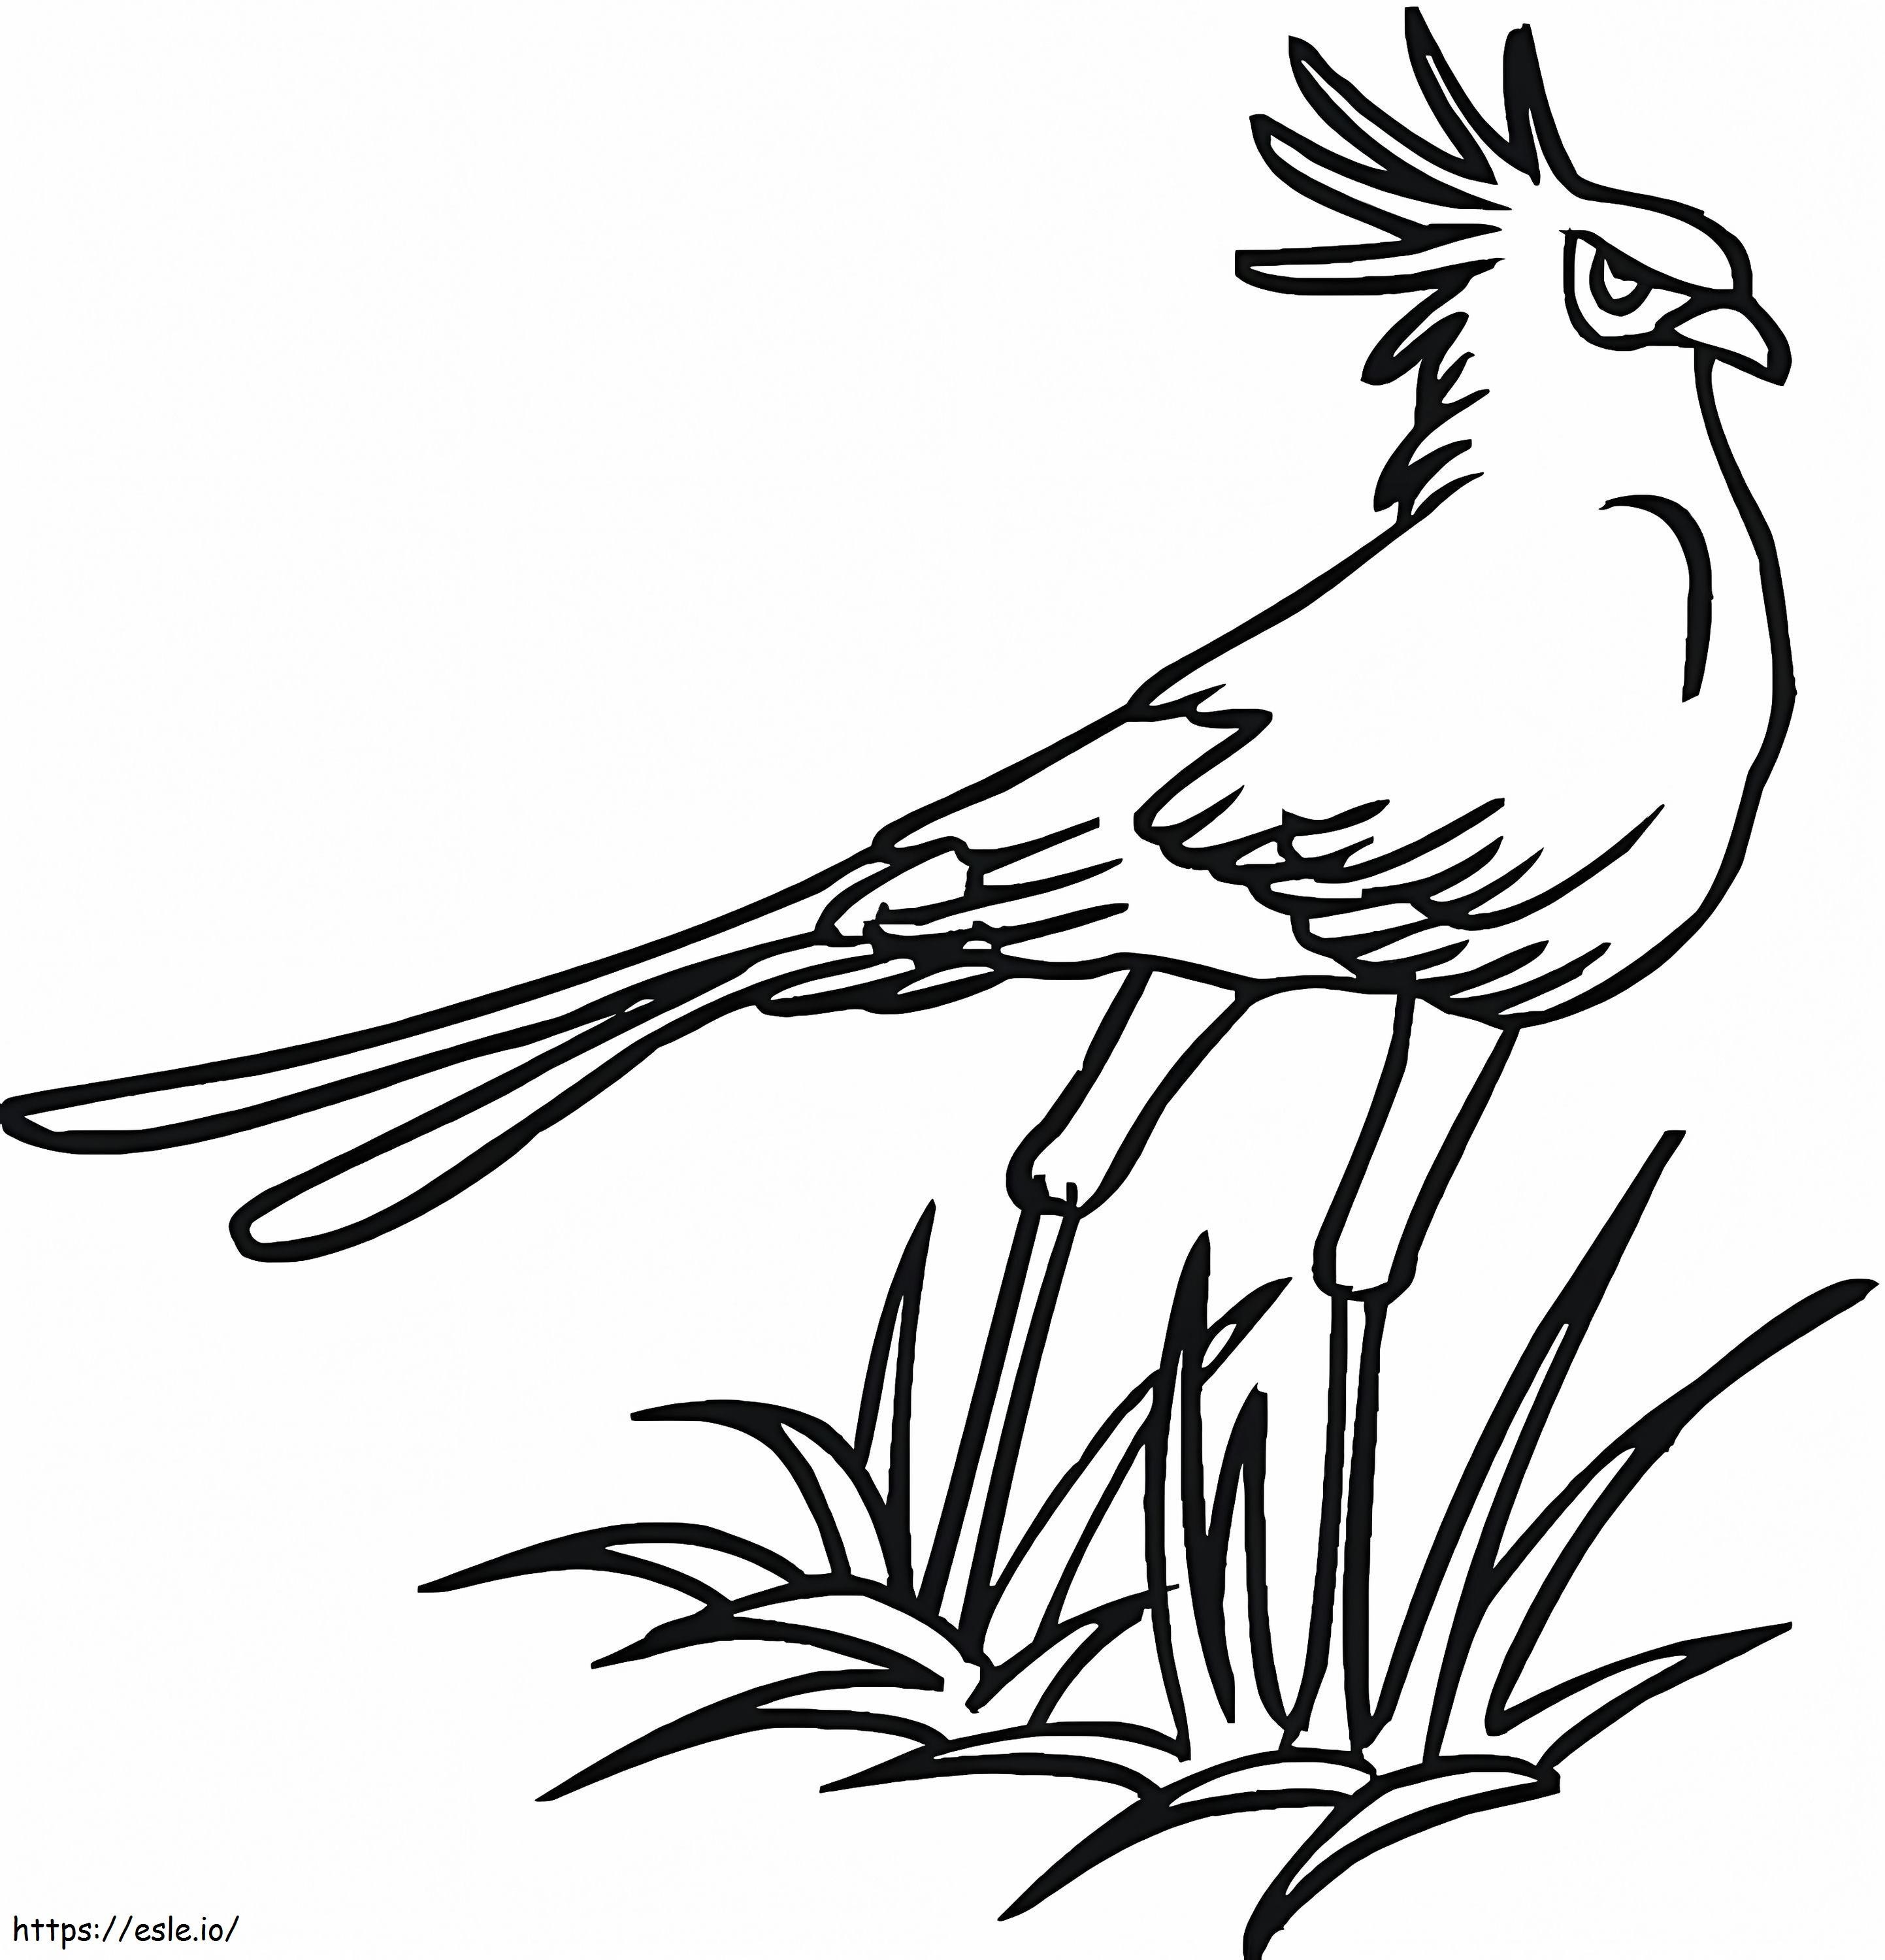 Secretary Bird On Grass coloring page